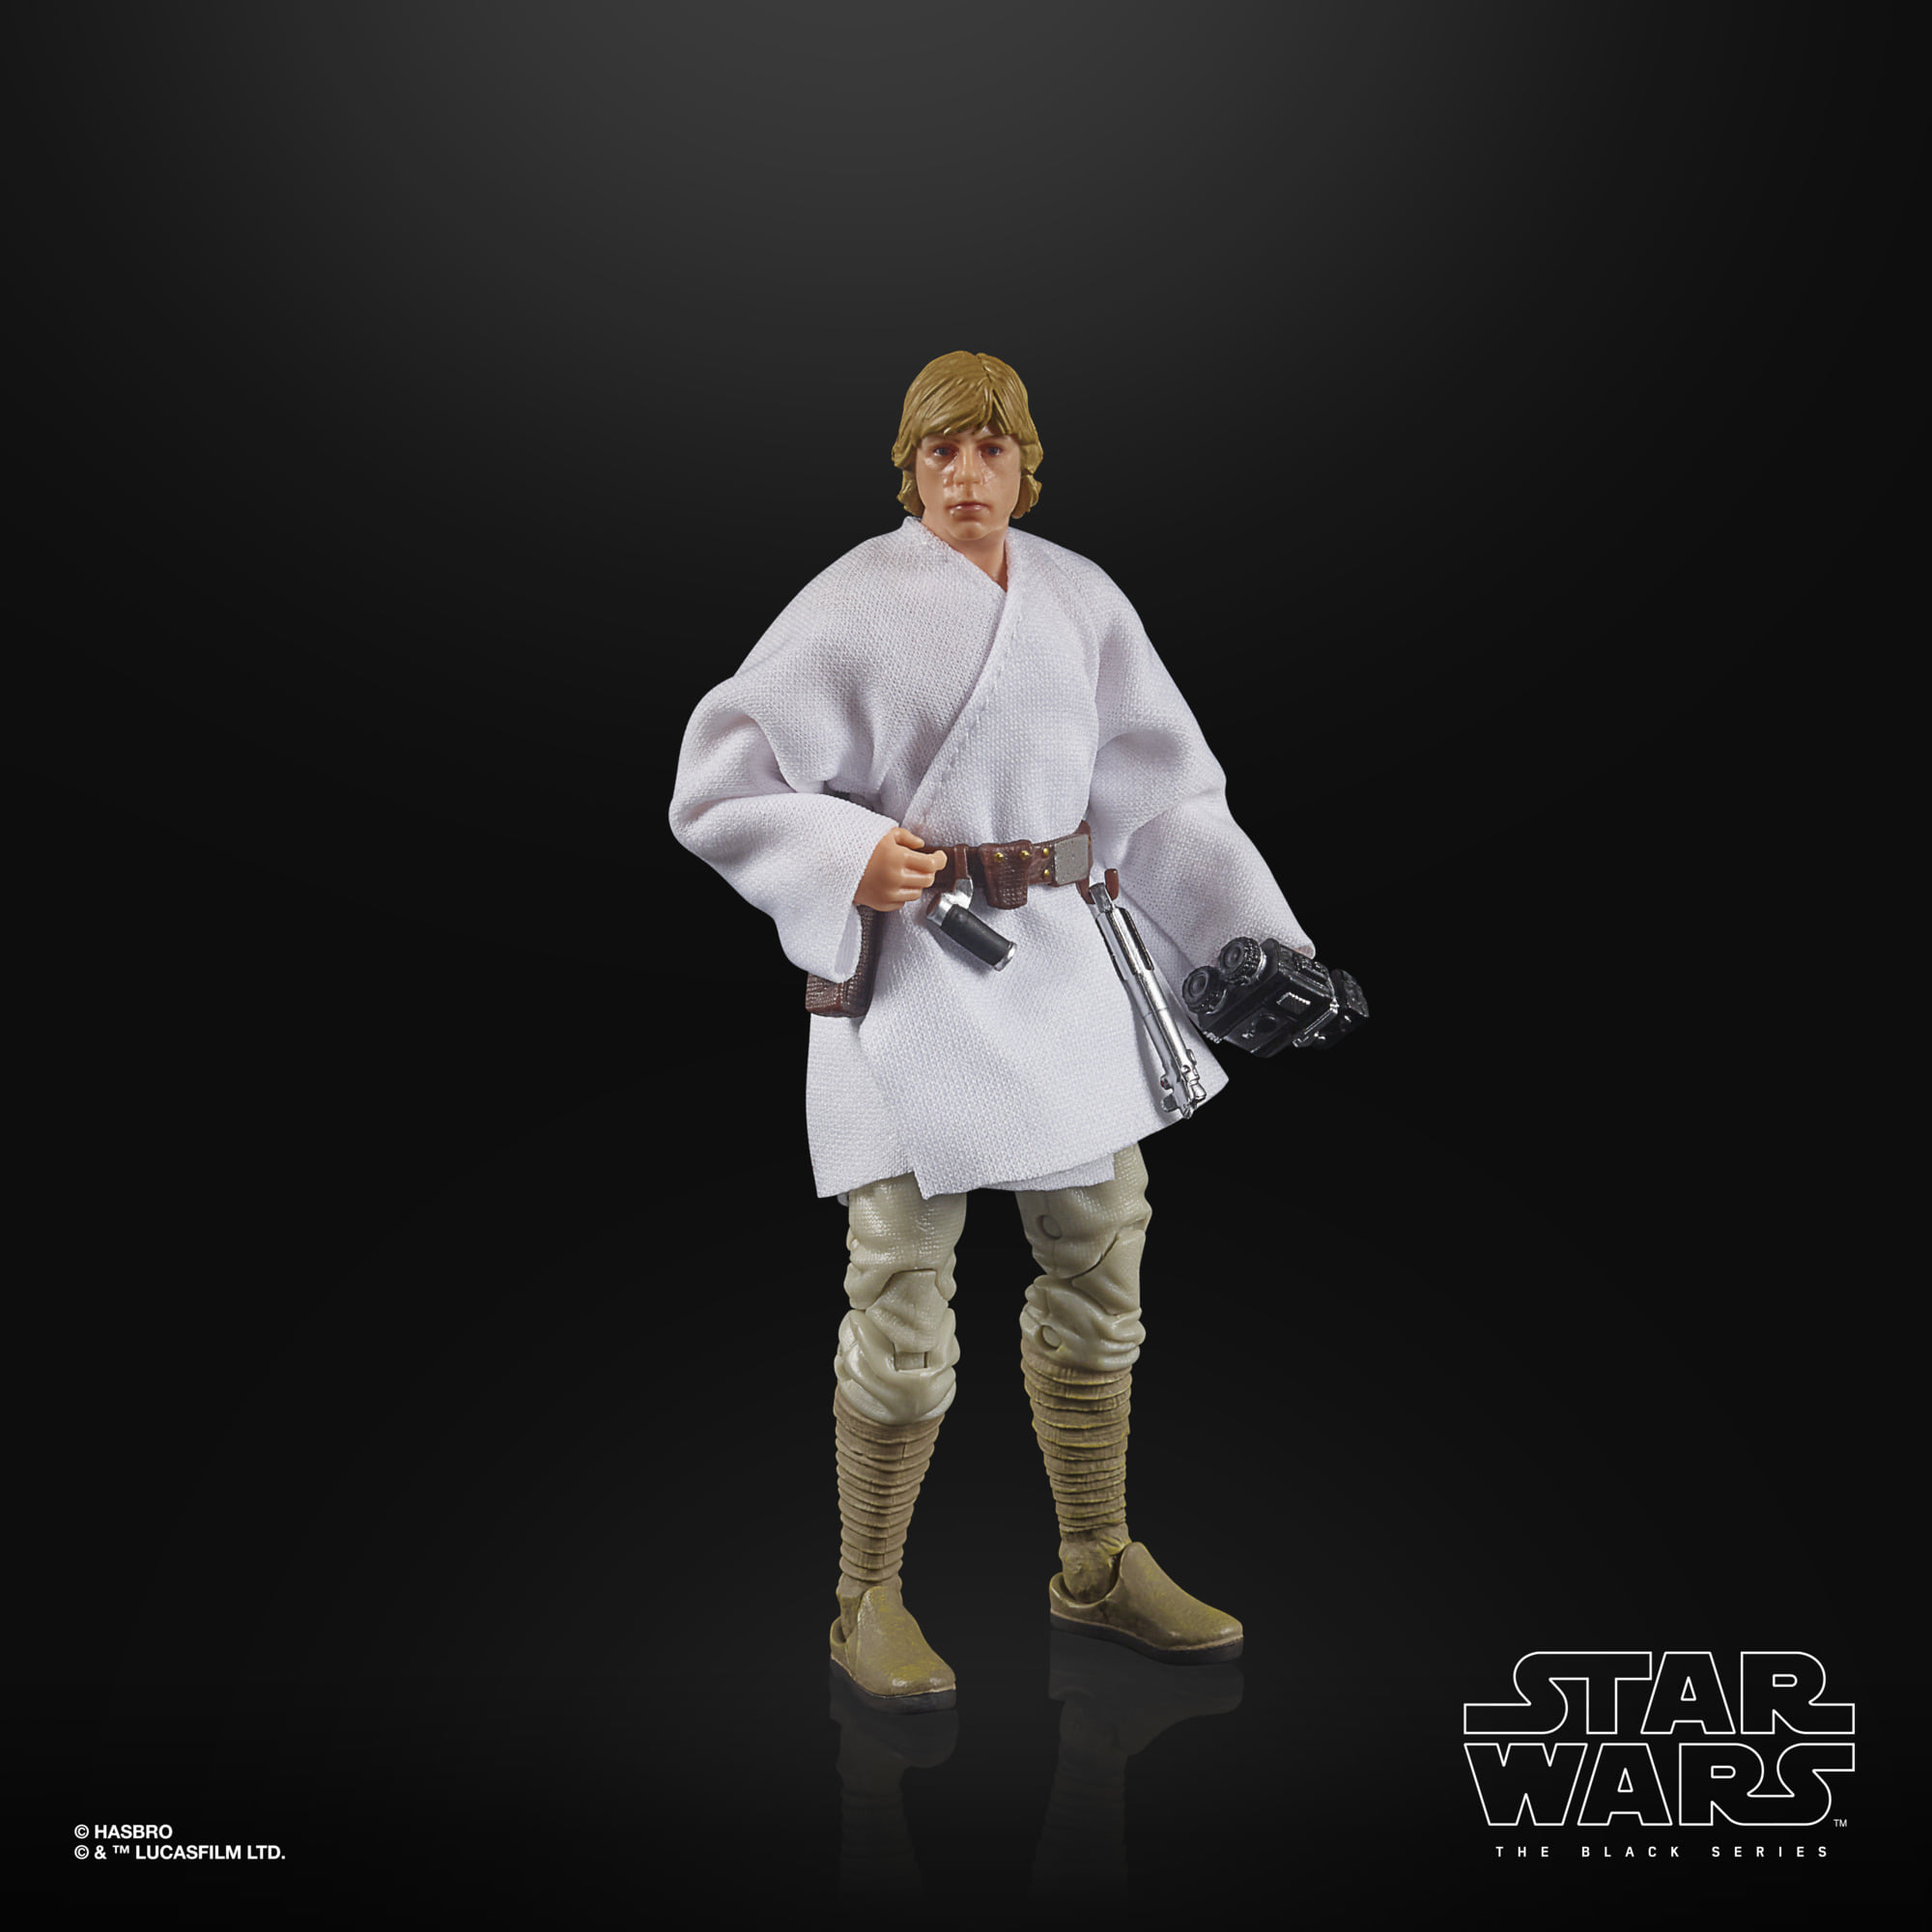 Star Wars The Black Series THE POWER OF THE FORCE - Luke Skywalker  